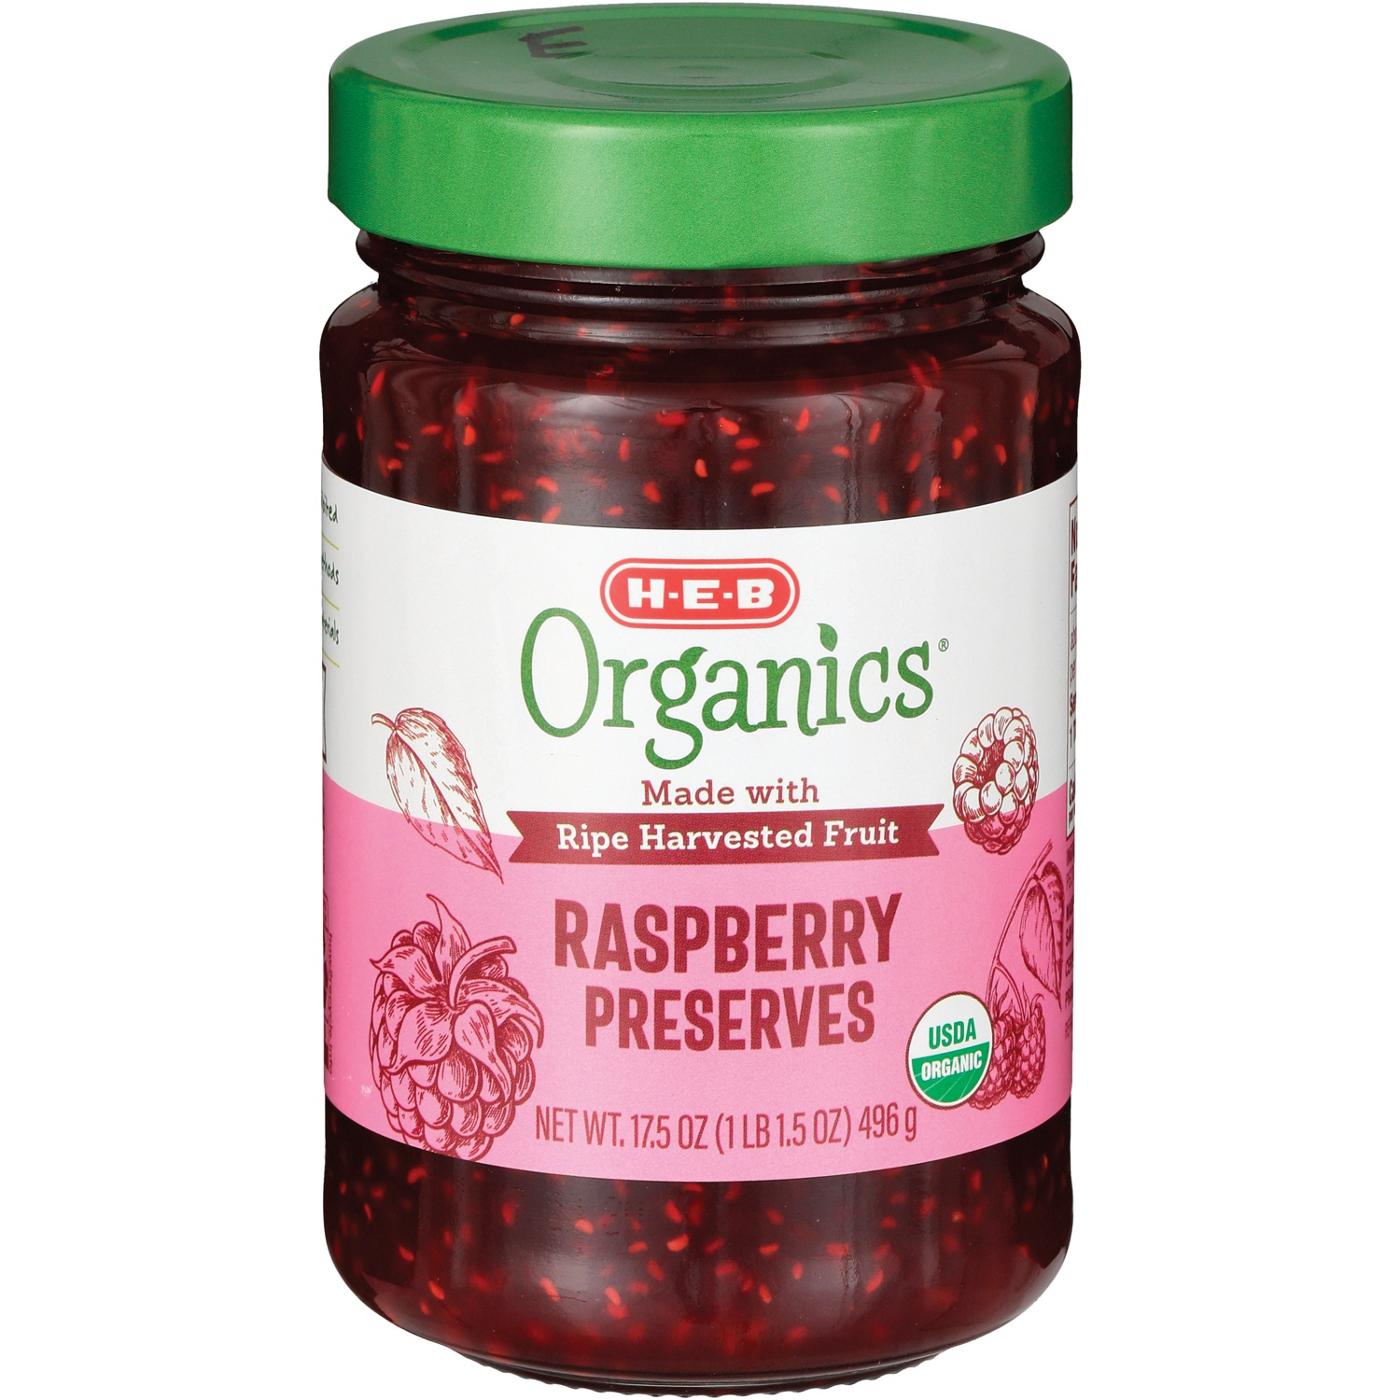 H-E-B Organics Raspberry Preserves; image 2 of 2